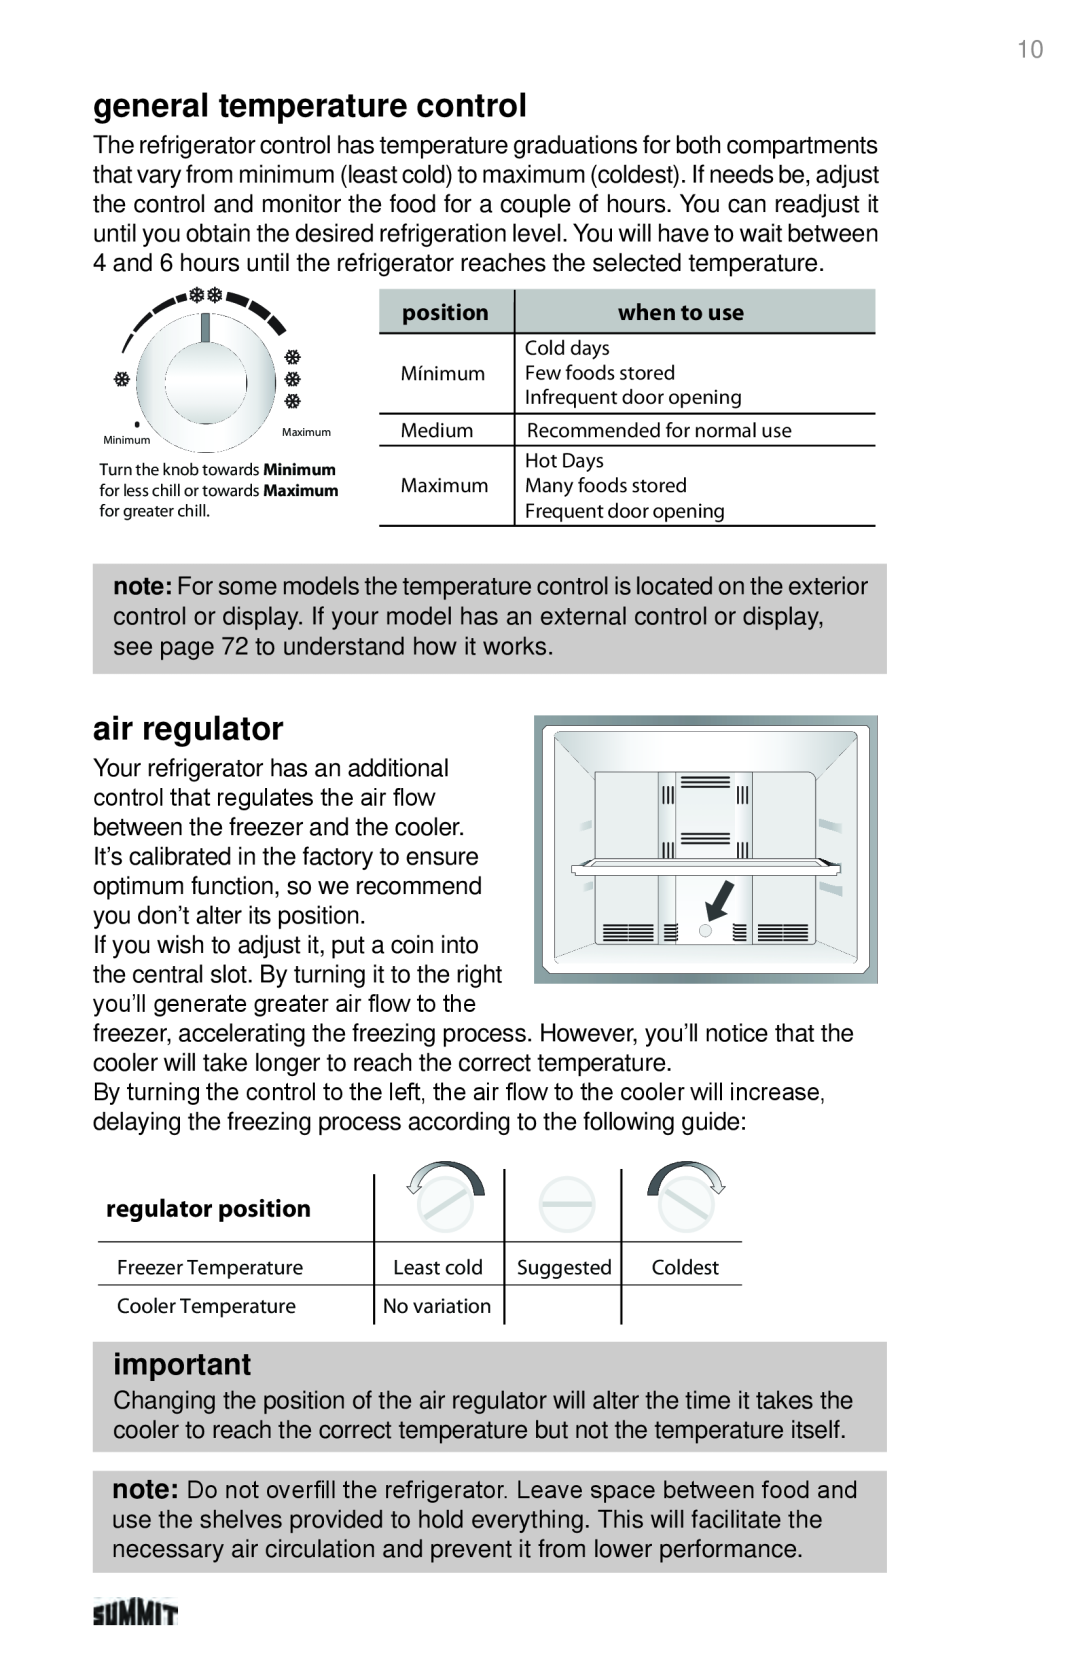 Summit 225D6783P011 manual general temperature control, air regulator, when to use, regulator position 